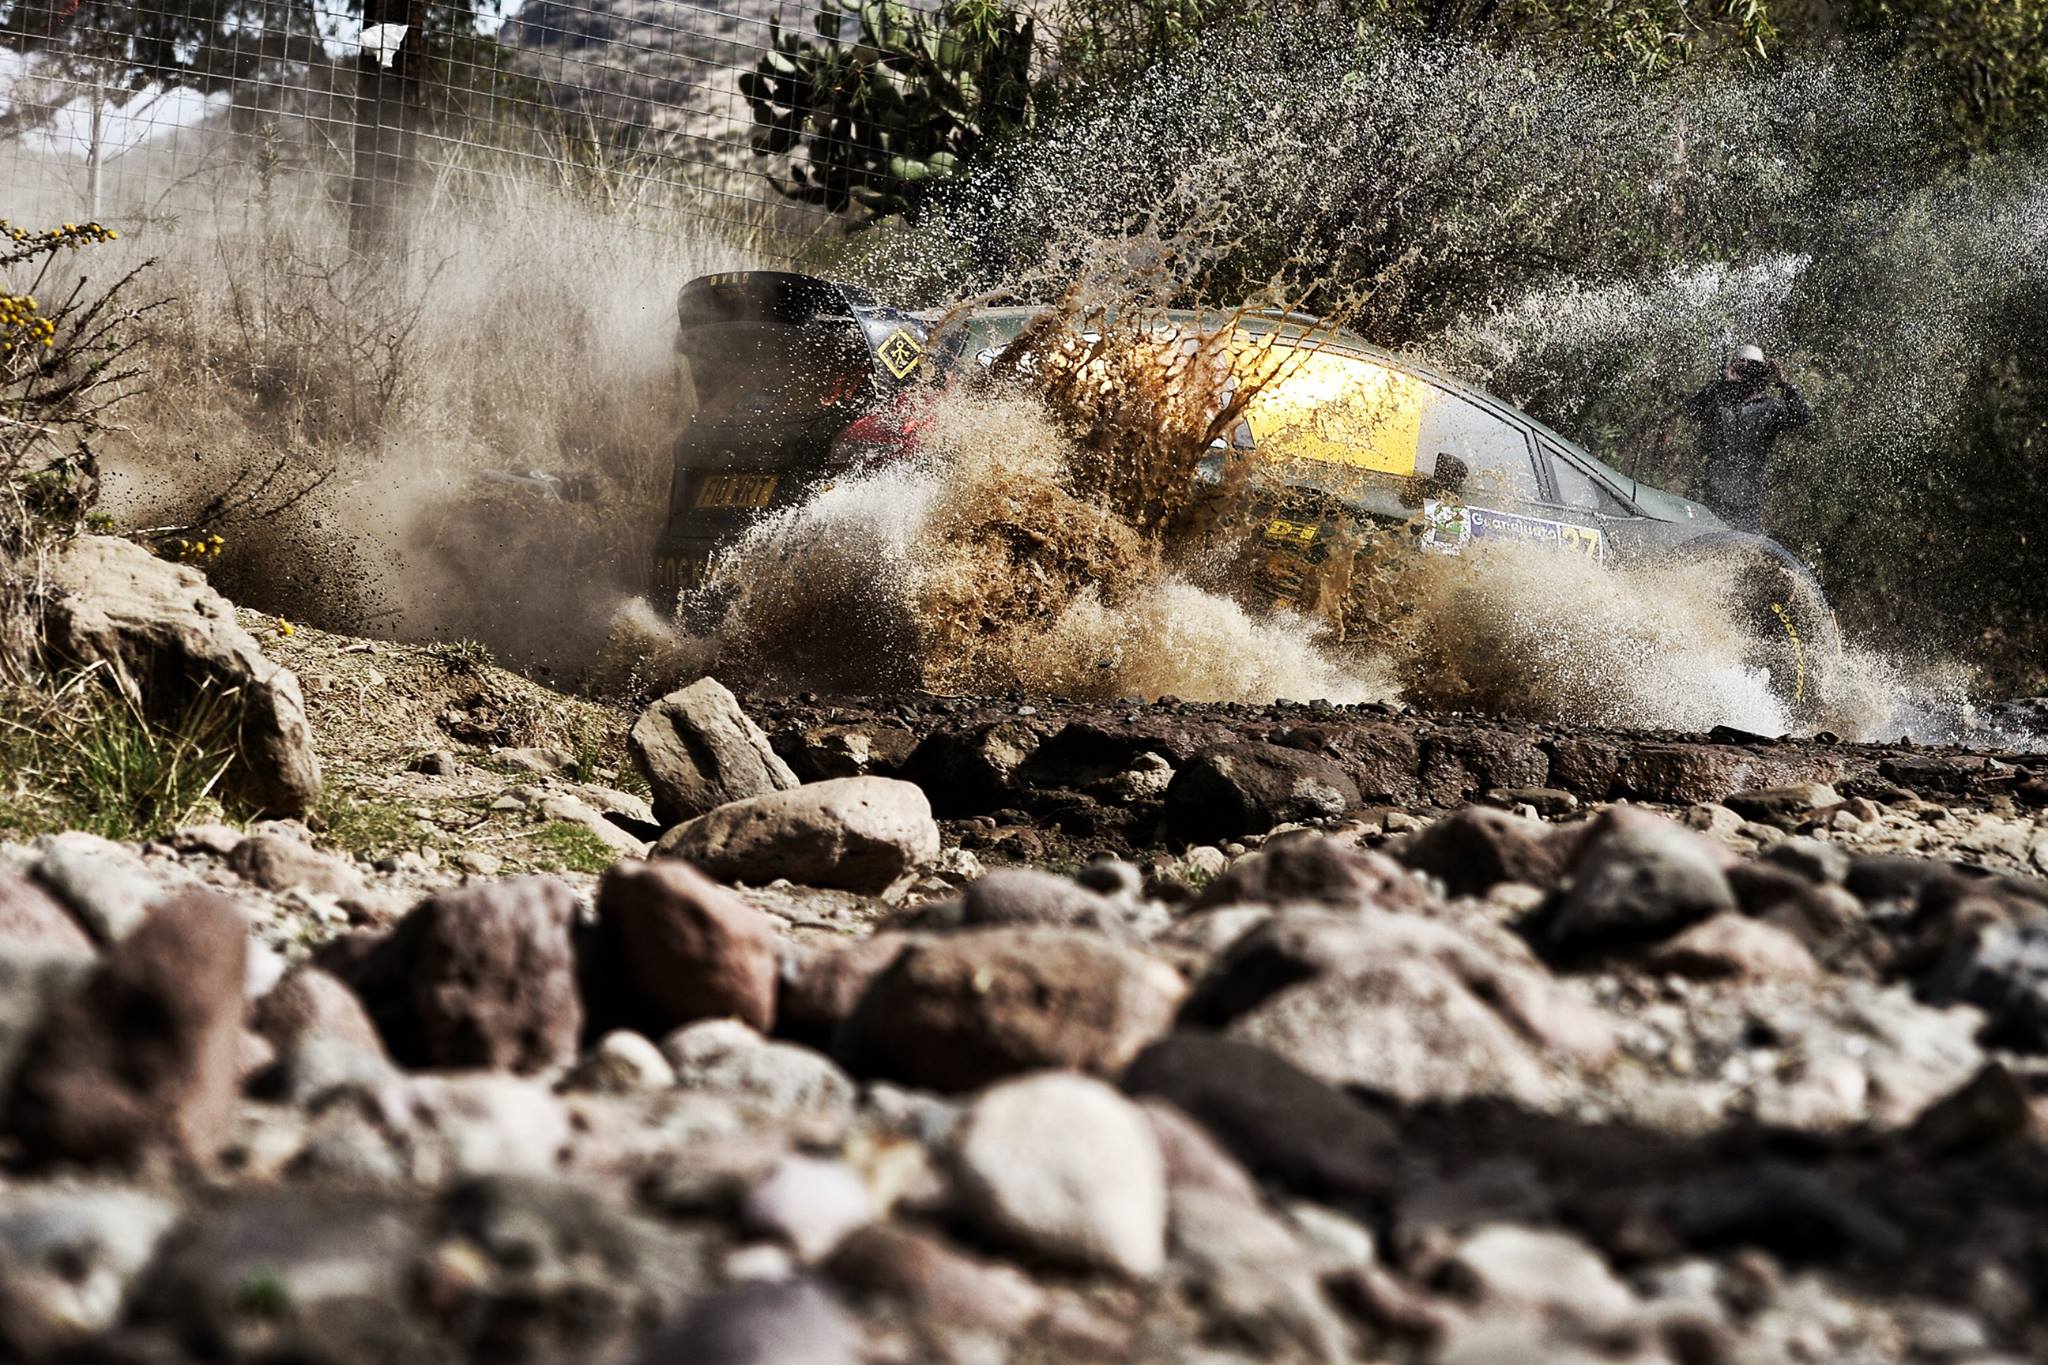 WRC: Rajd Meksyku 2015